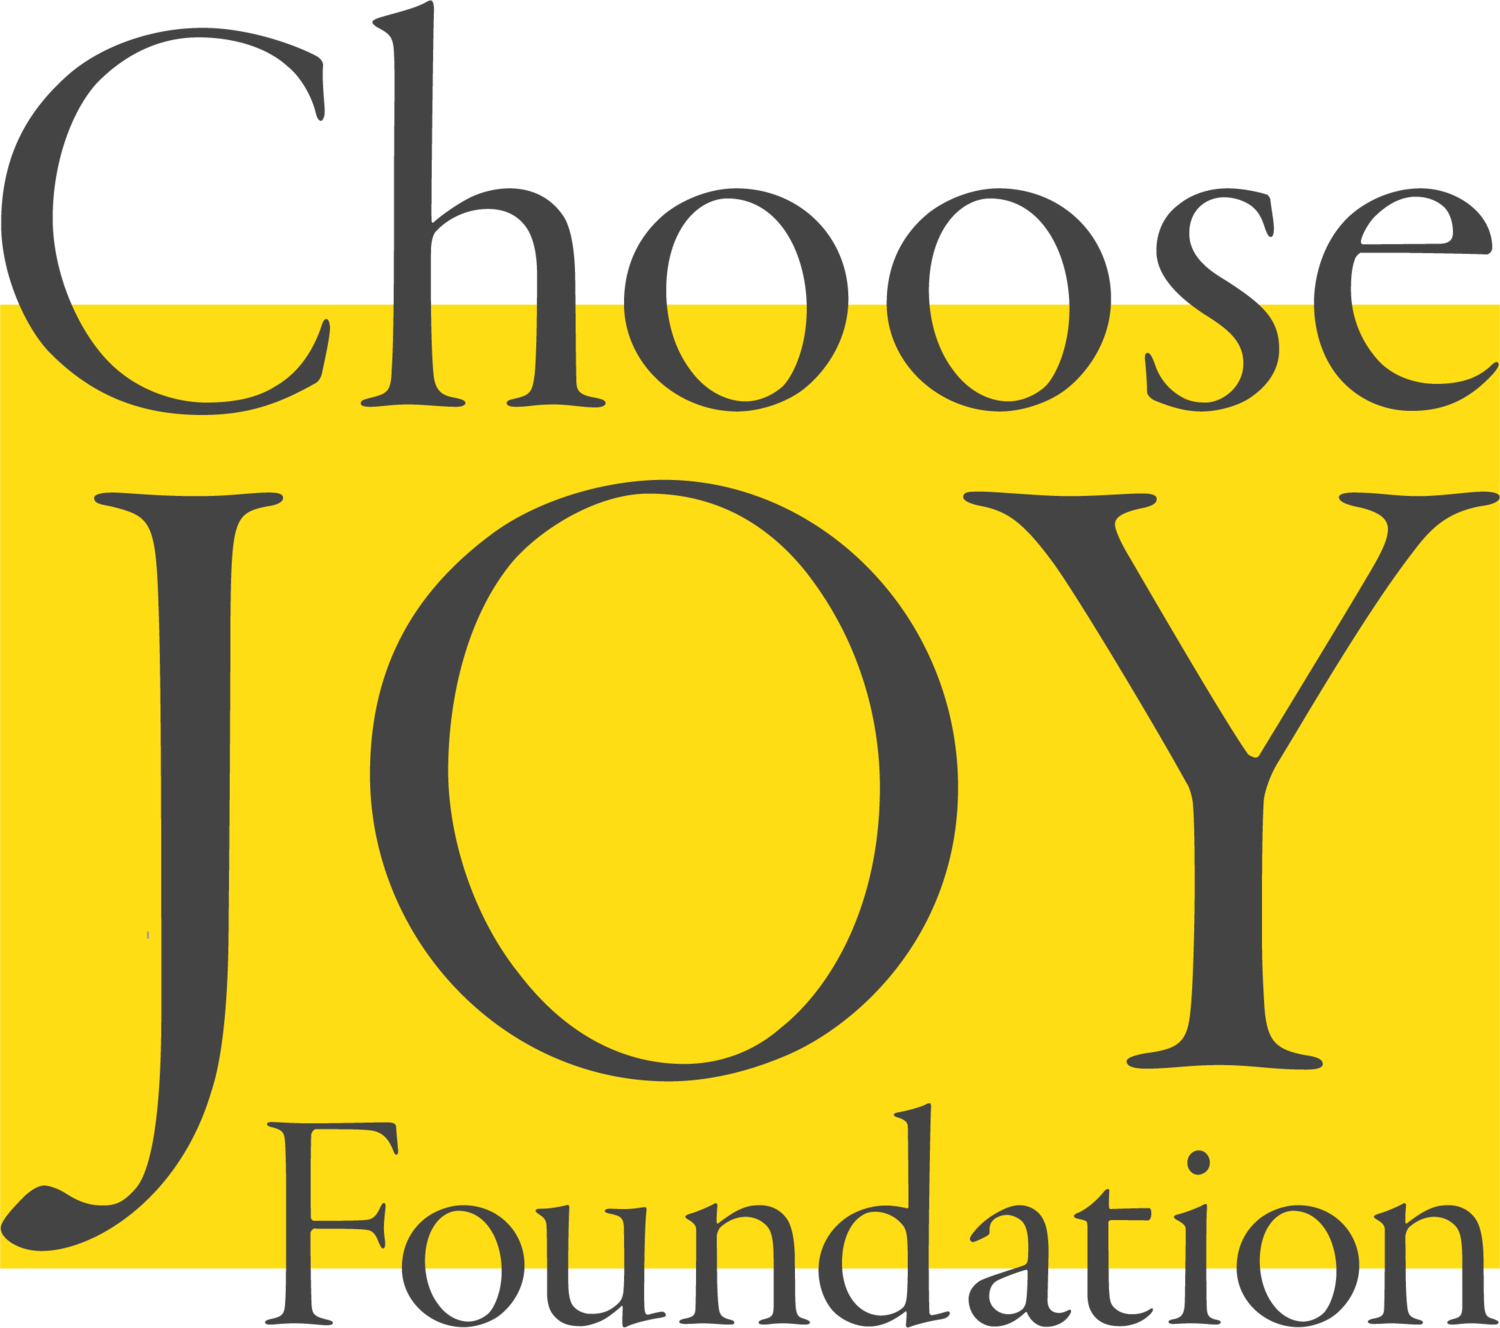 Choose Joy Foundation